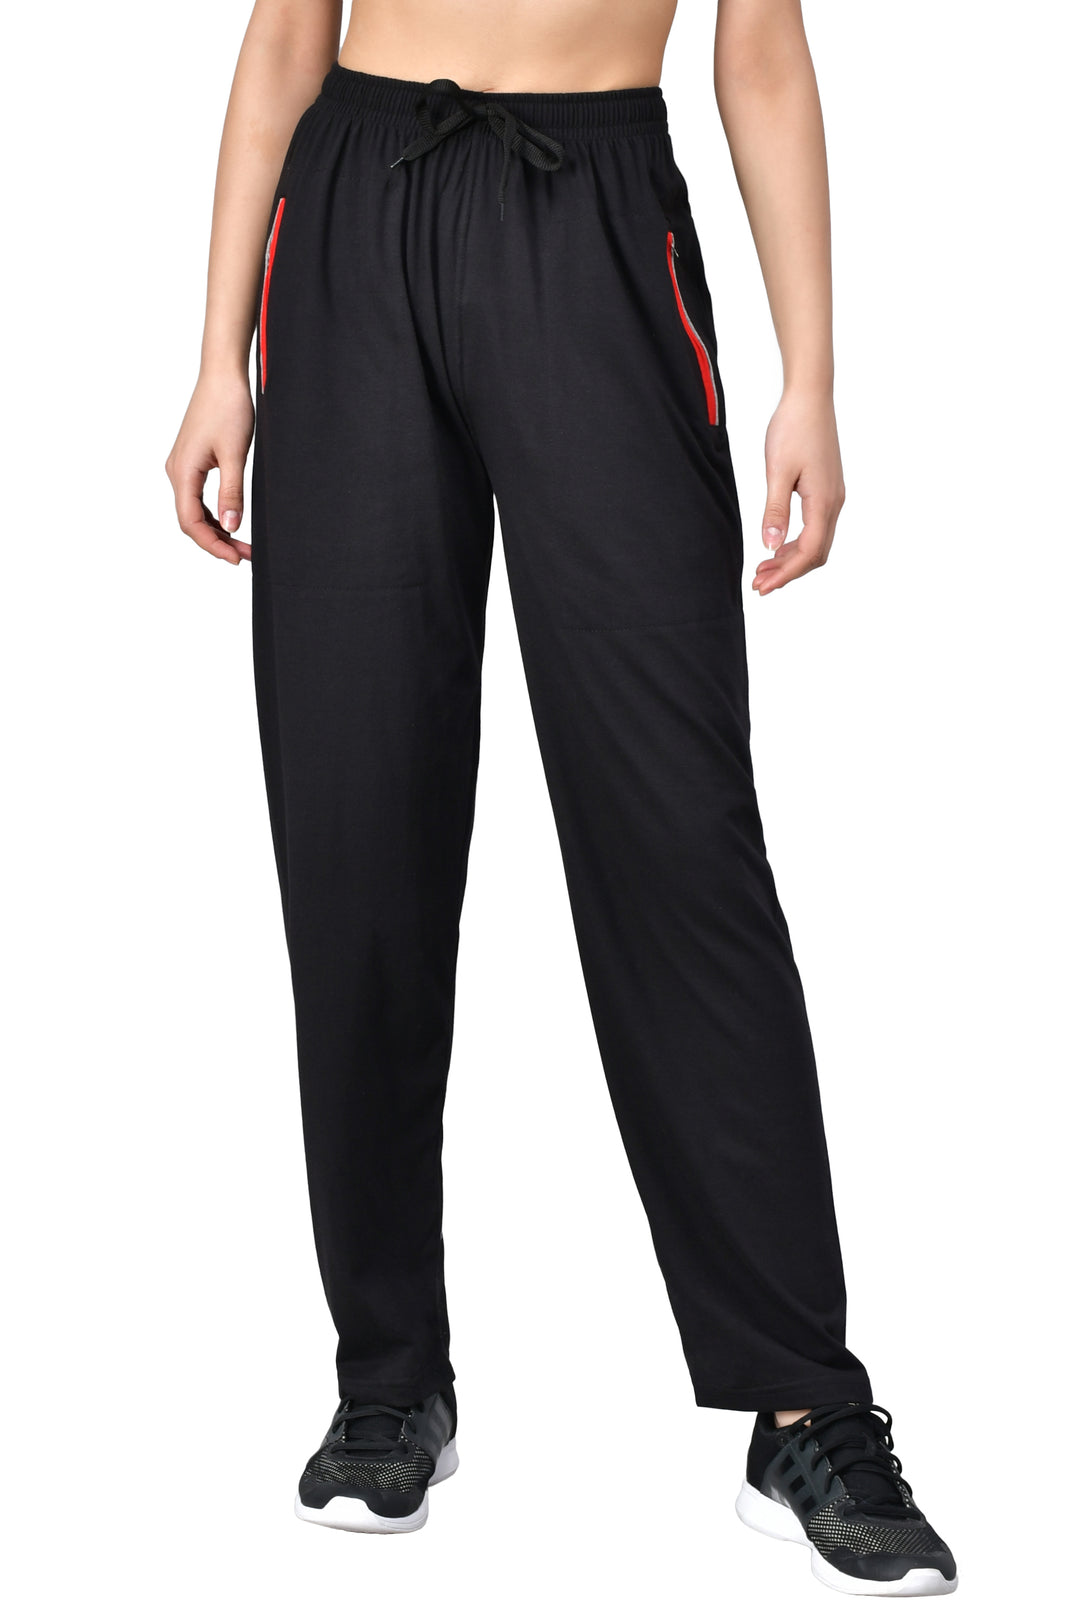 Women's Black Track Pants with Zip Pockets - FflirtyGo